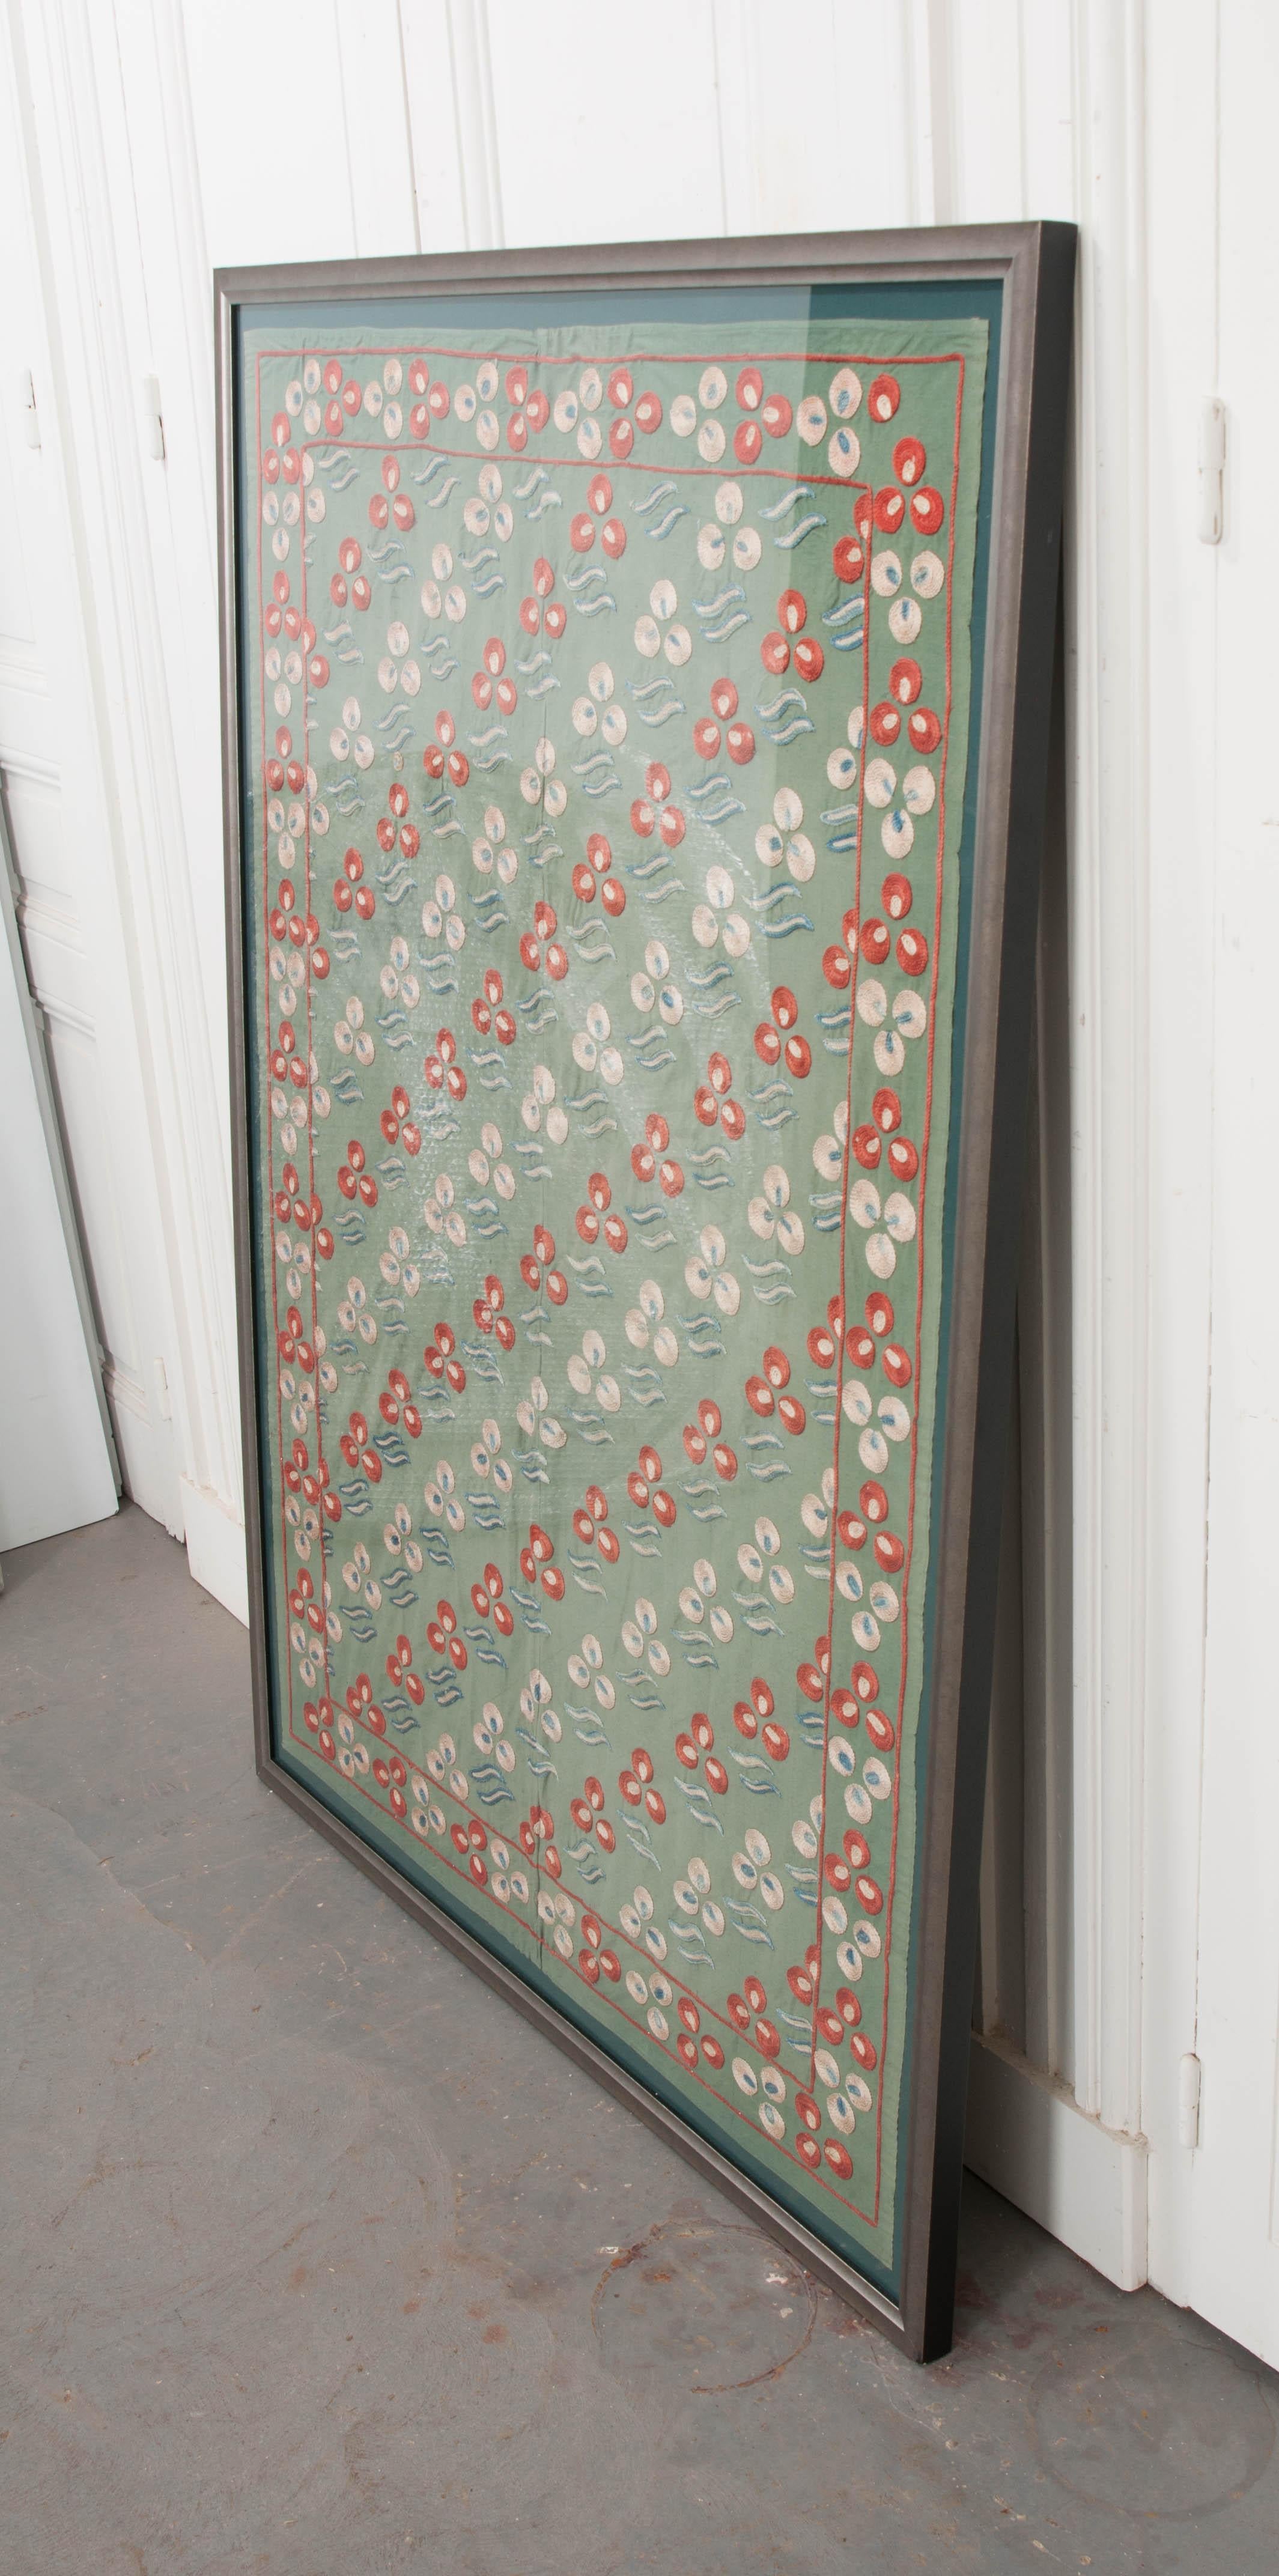 Uzbek Rare Vintage “Nim Suzani” Embroidered Textile Panel